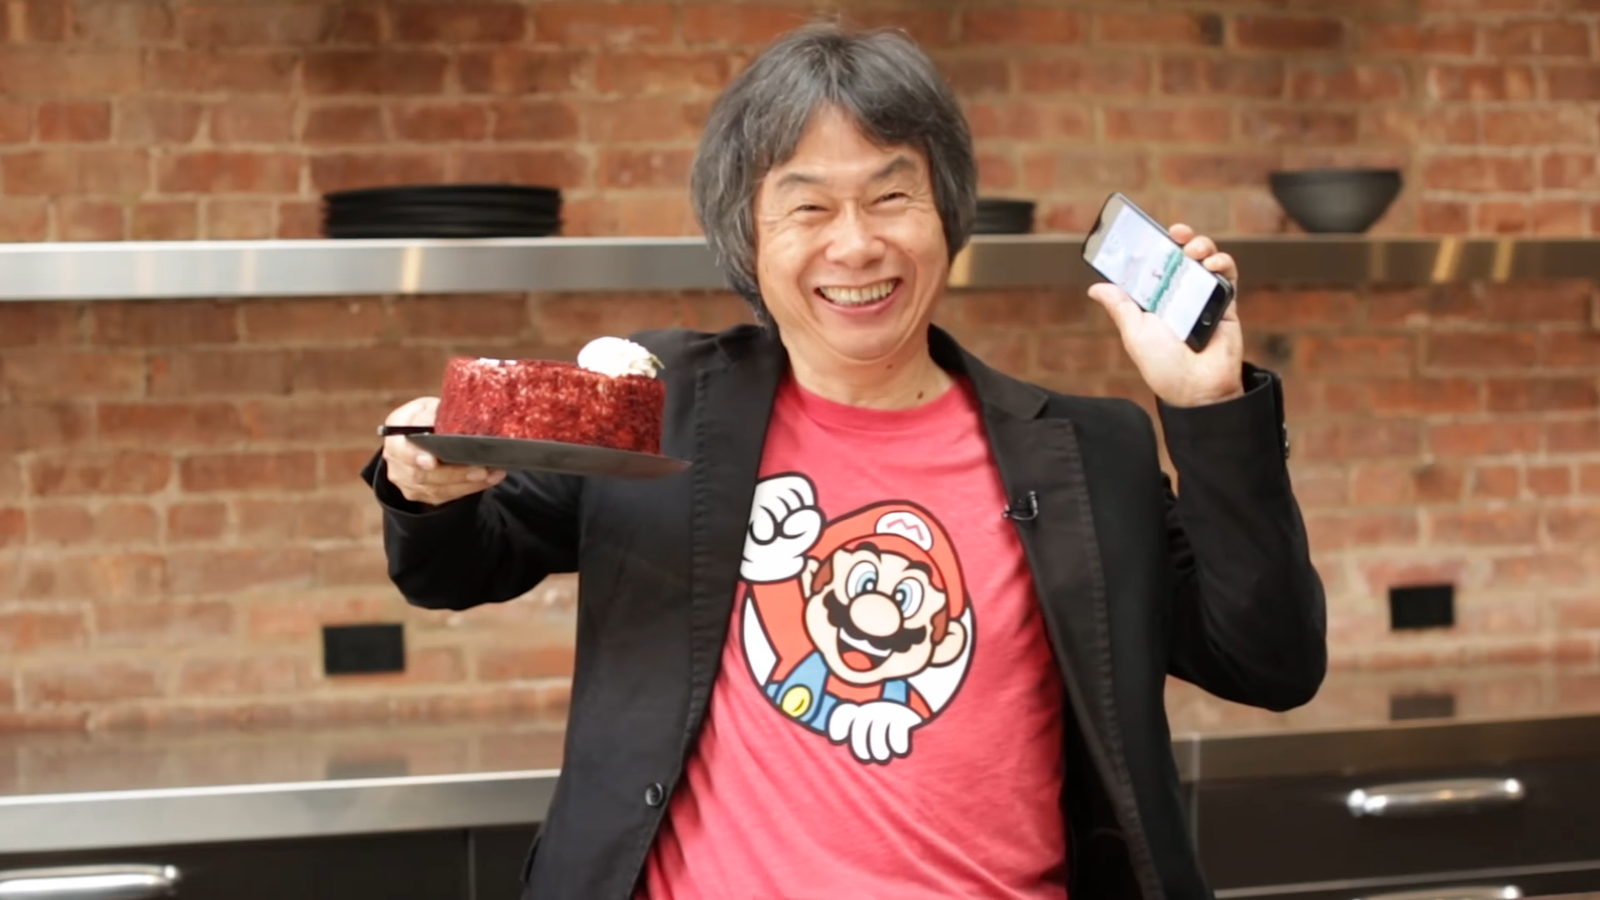 A chat with Shigeru Miyamoto on the eve of Super Mario Run